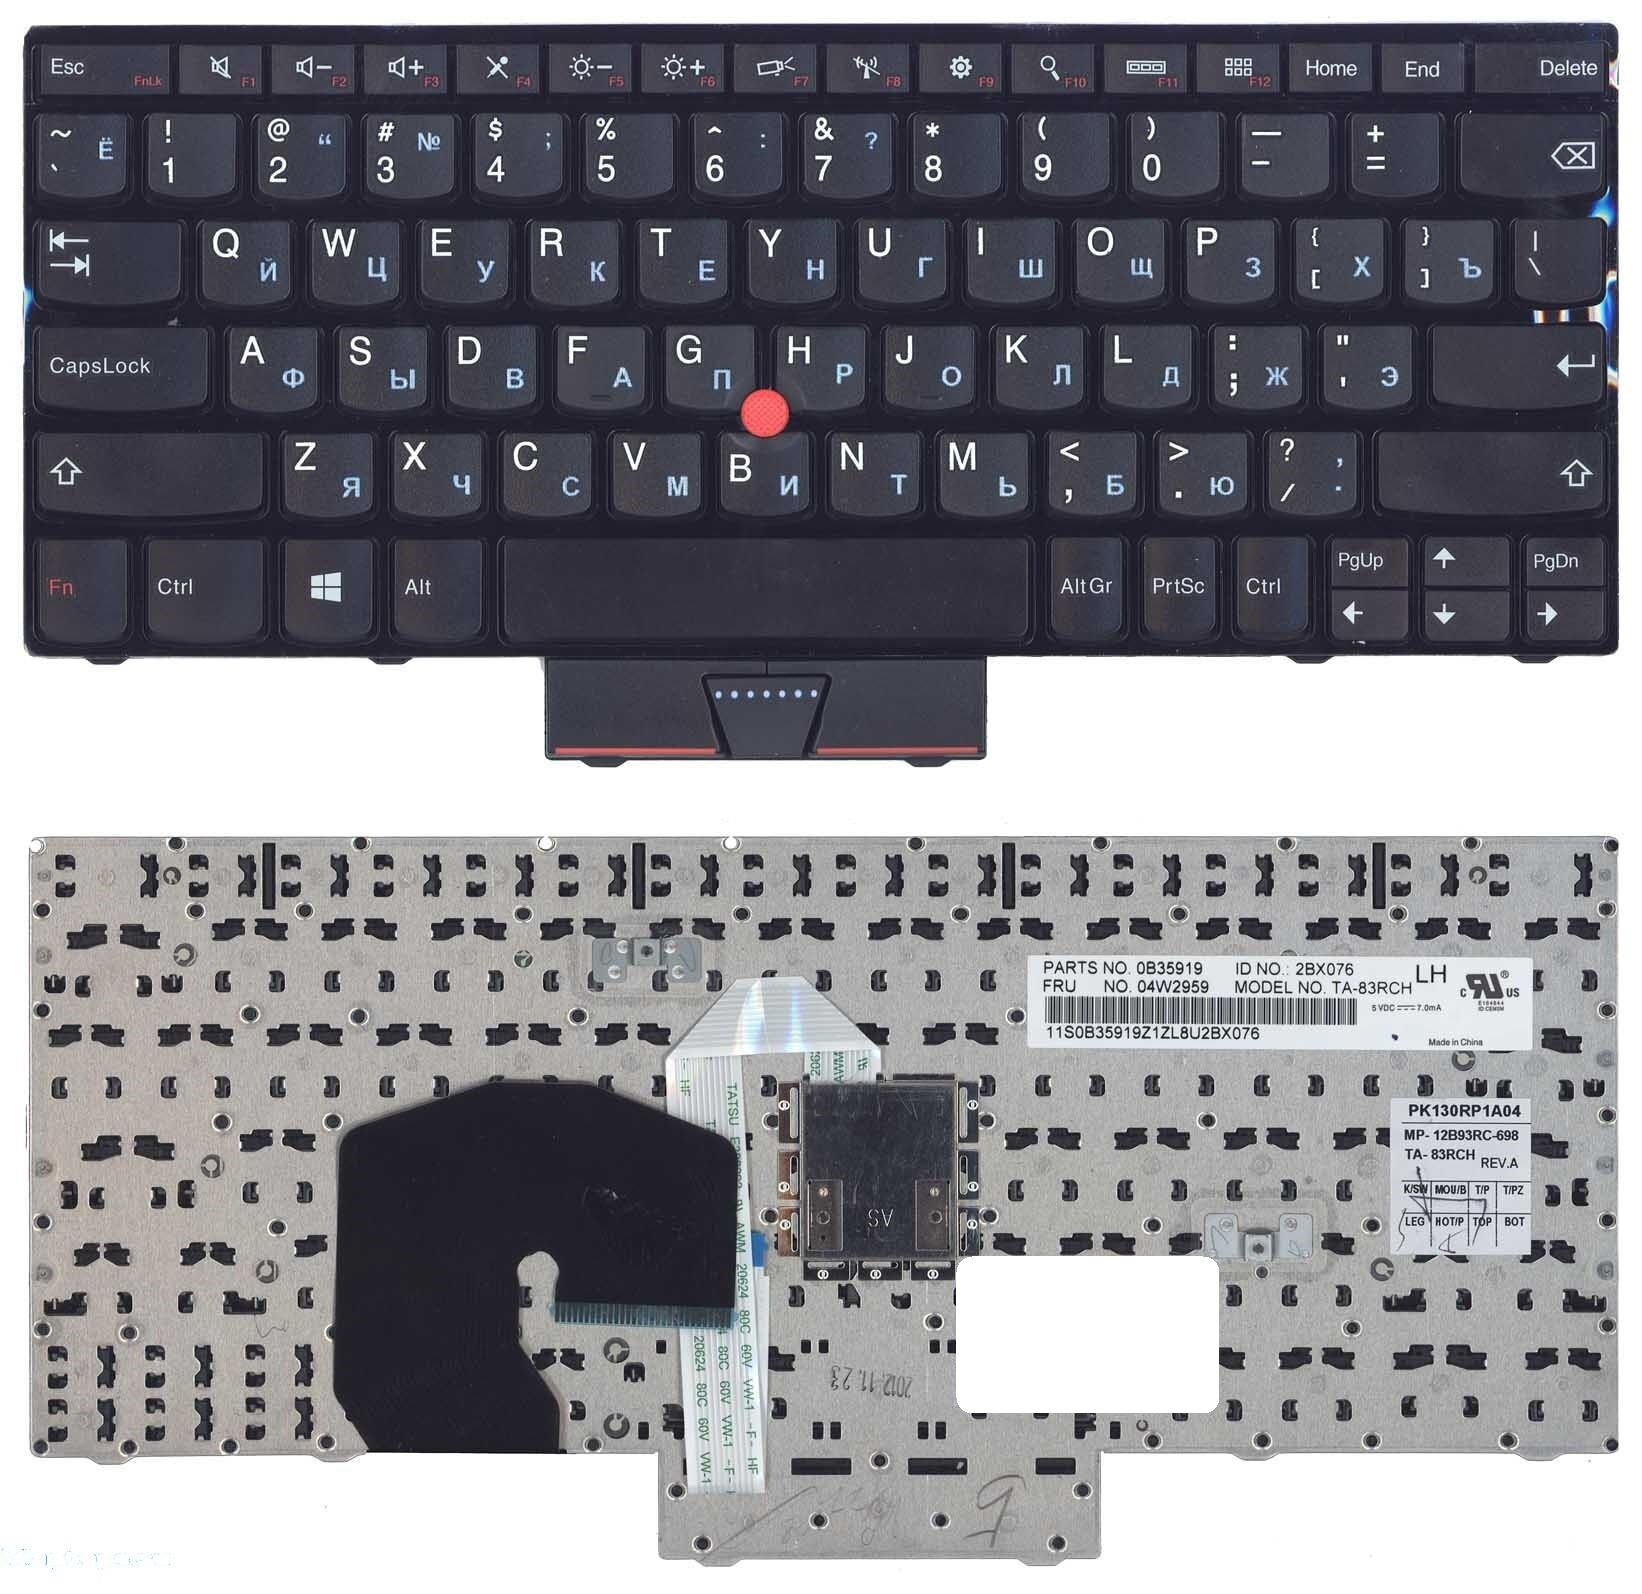 Клавиатура для ноутбука Lenovo S230u S230 s230i уценка p/n: 04W2927, 0B35887, PK130RP1A35